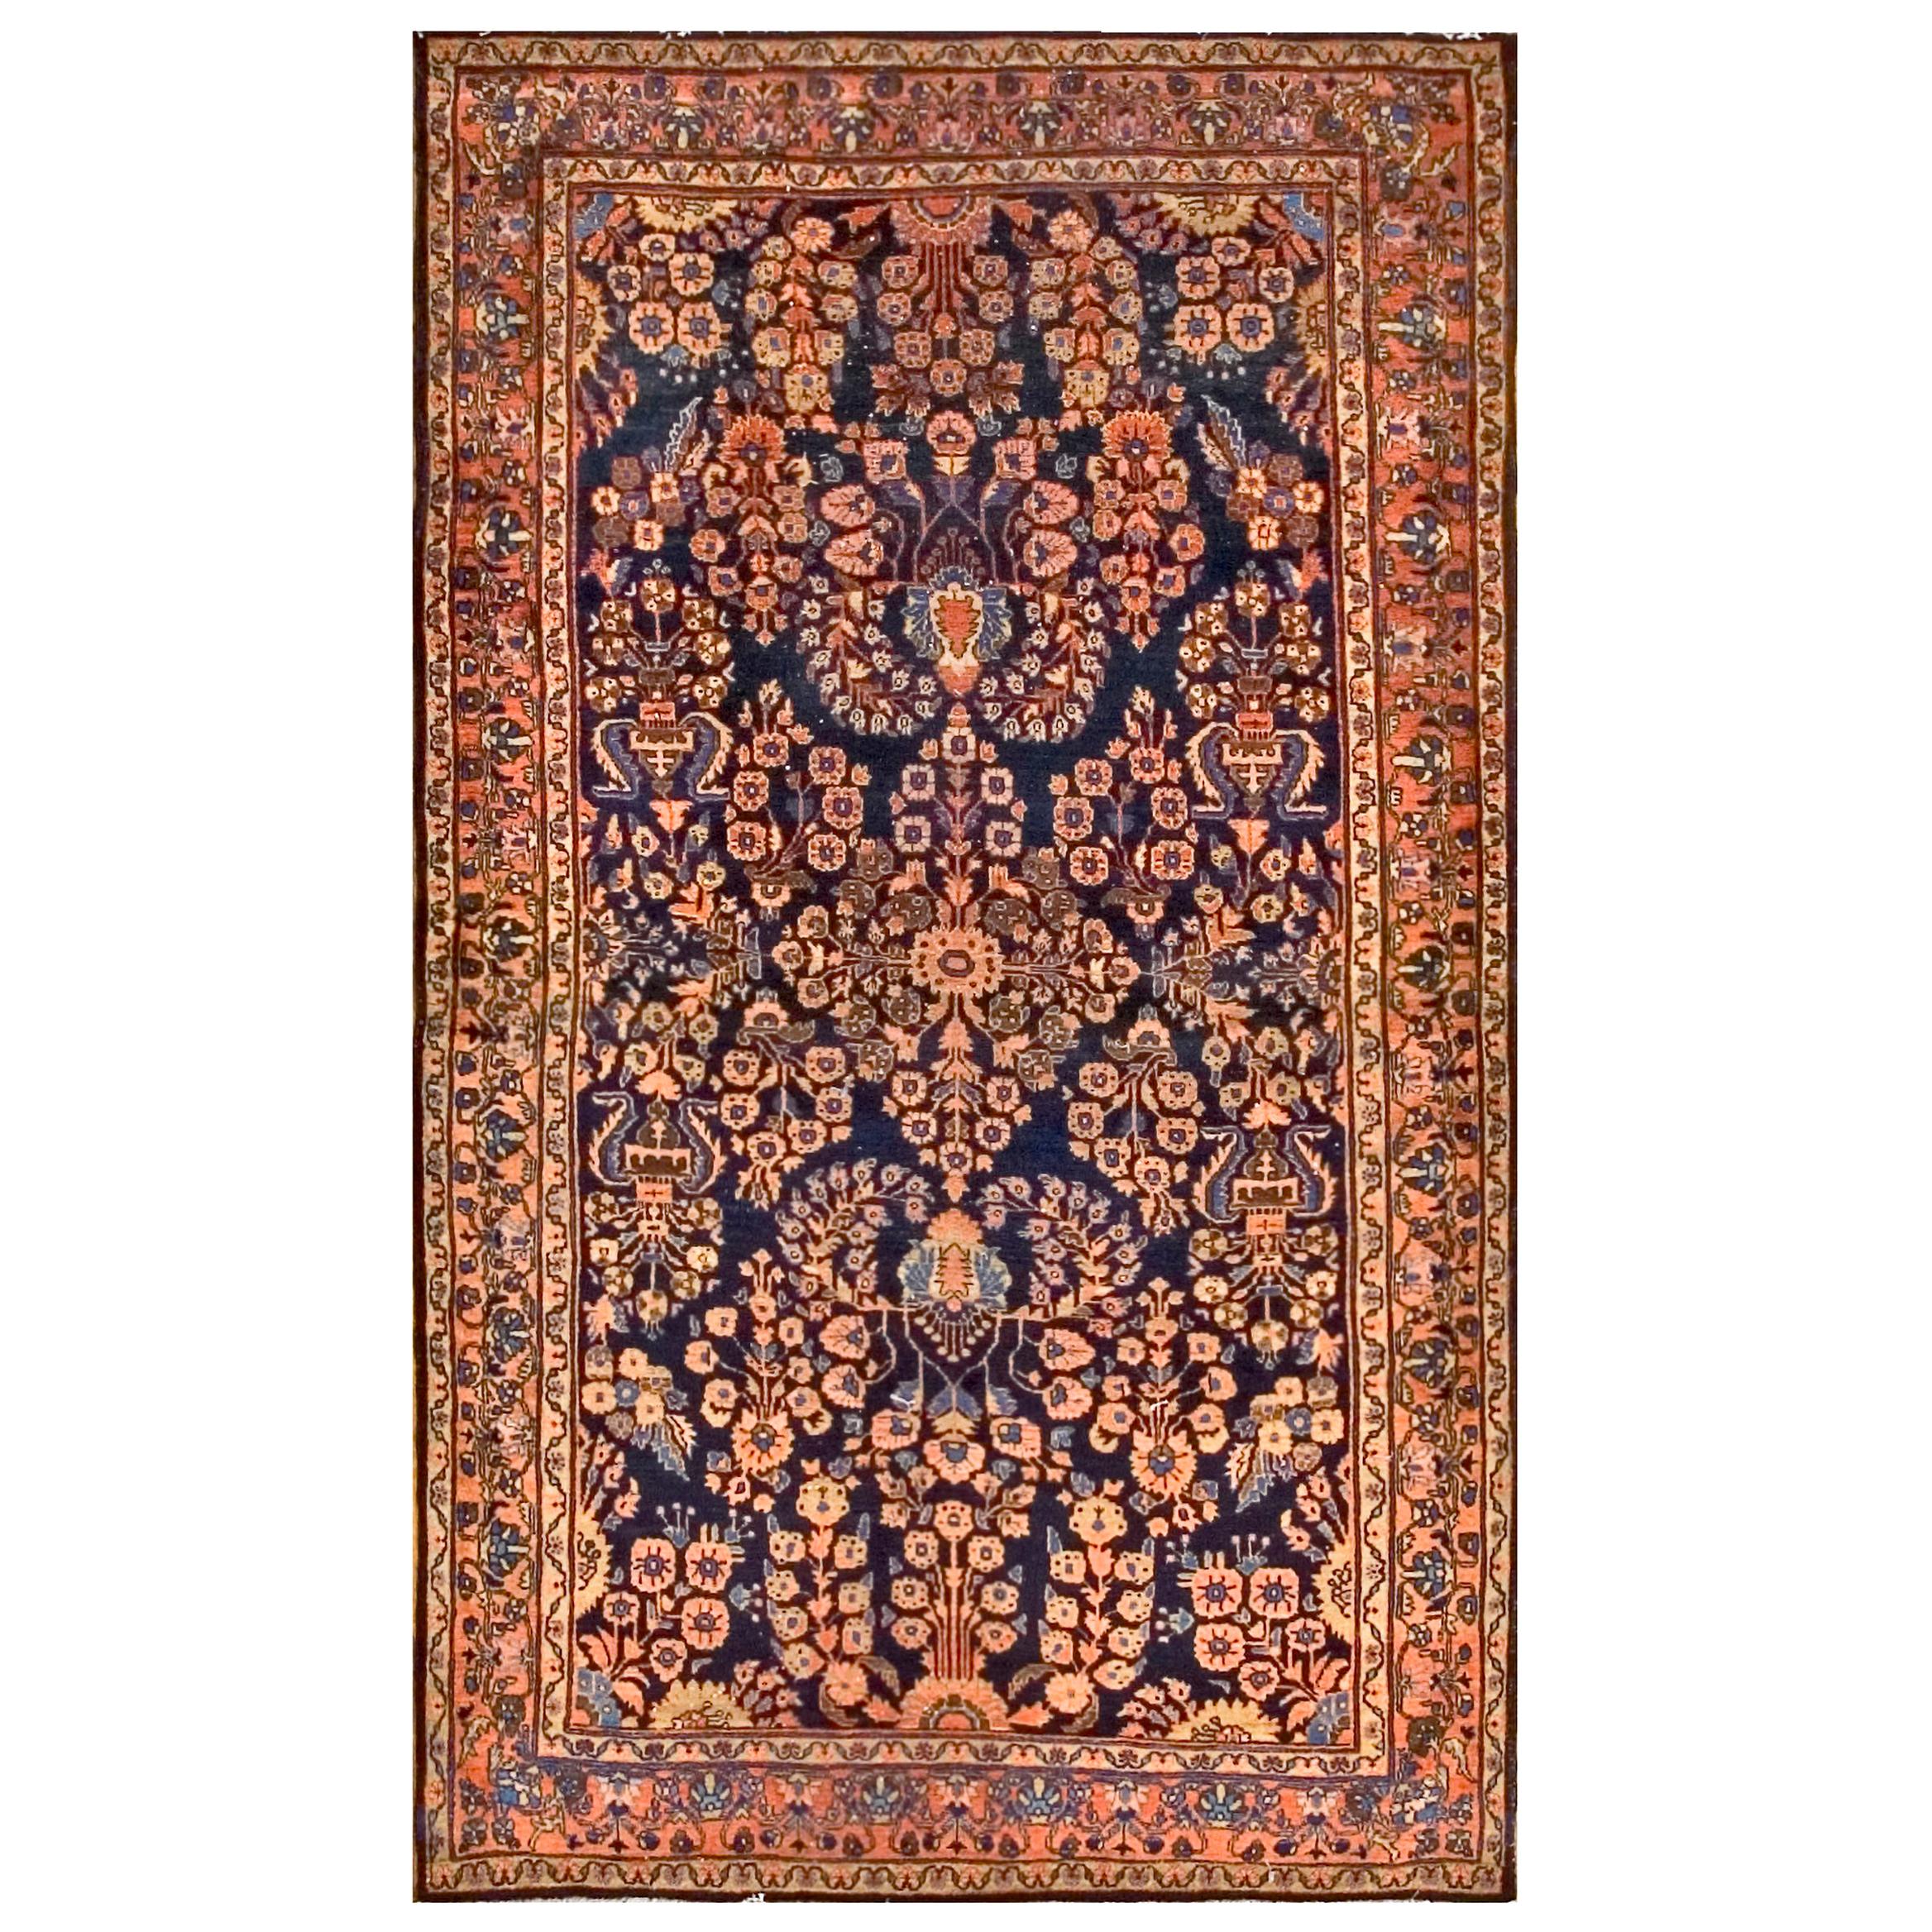 Early 20th Century Persian Sarouk Carpet ( 3'10" x 6'4" - 117 x 193 )